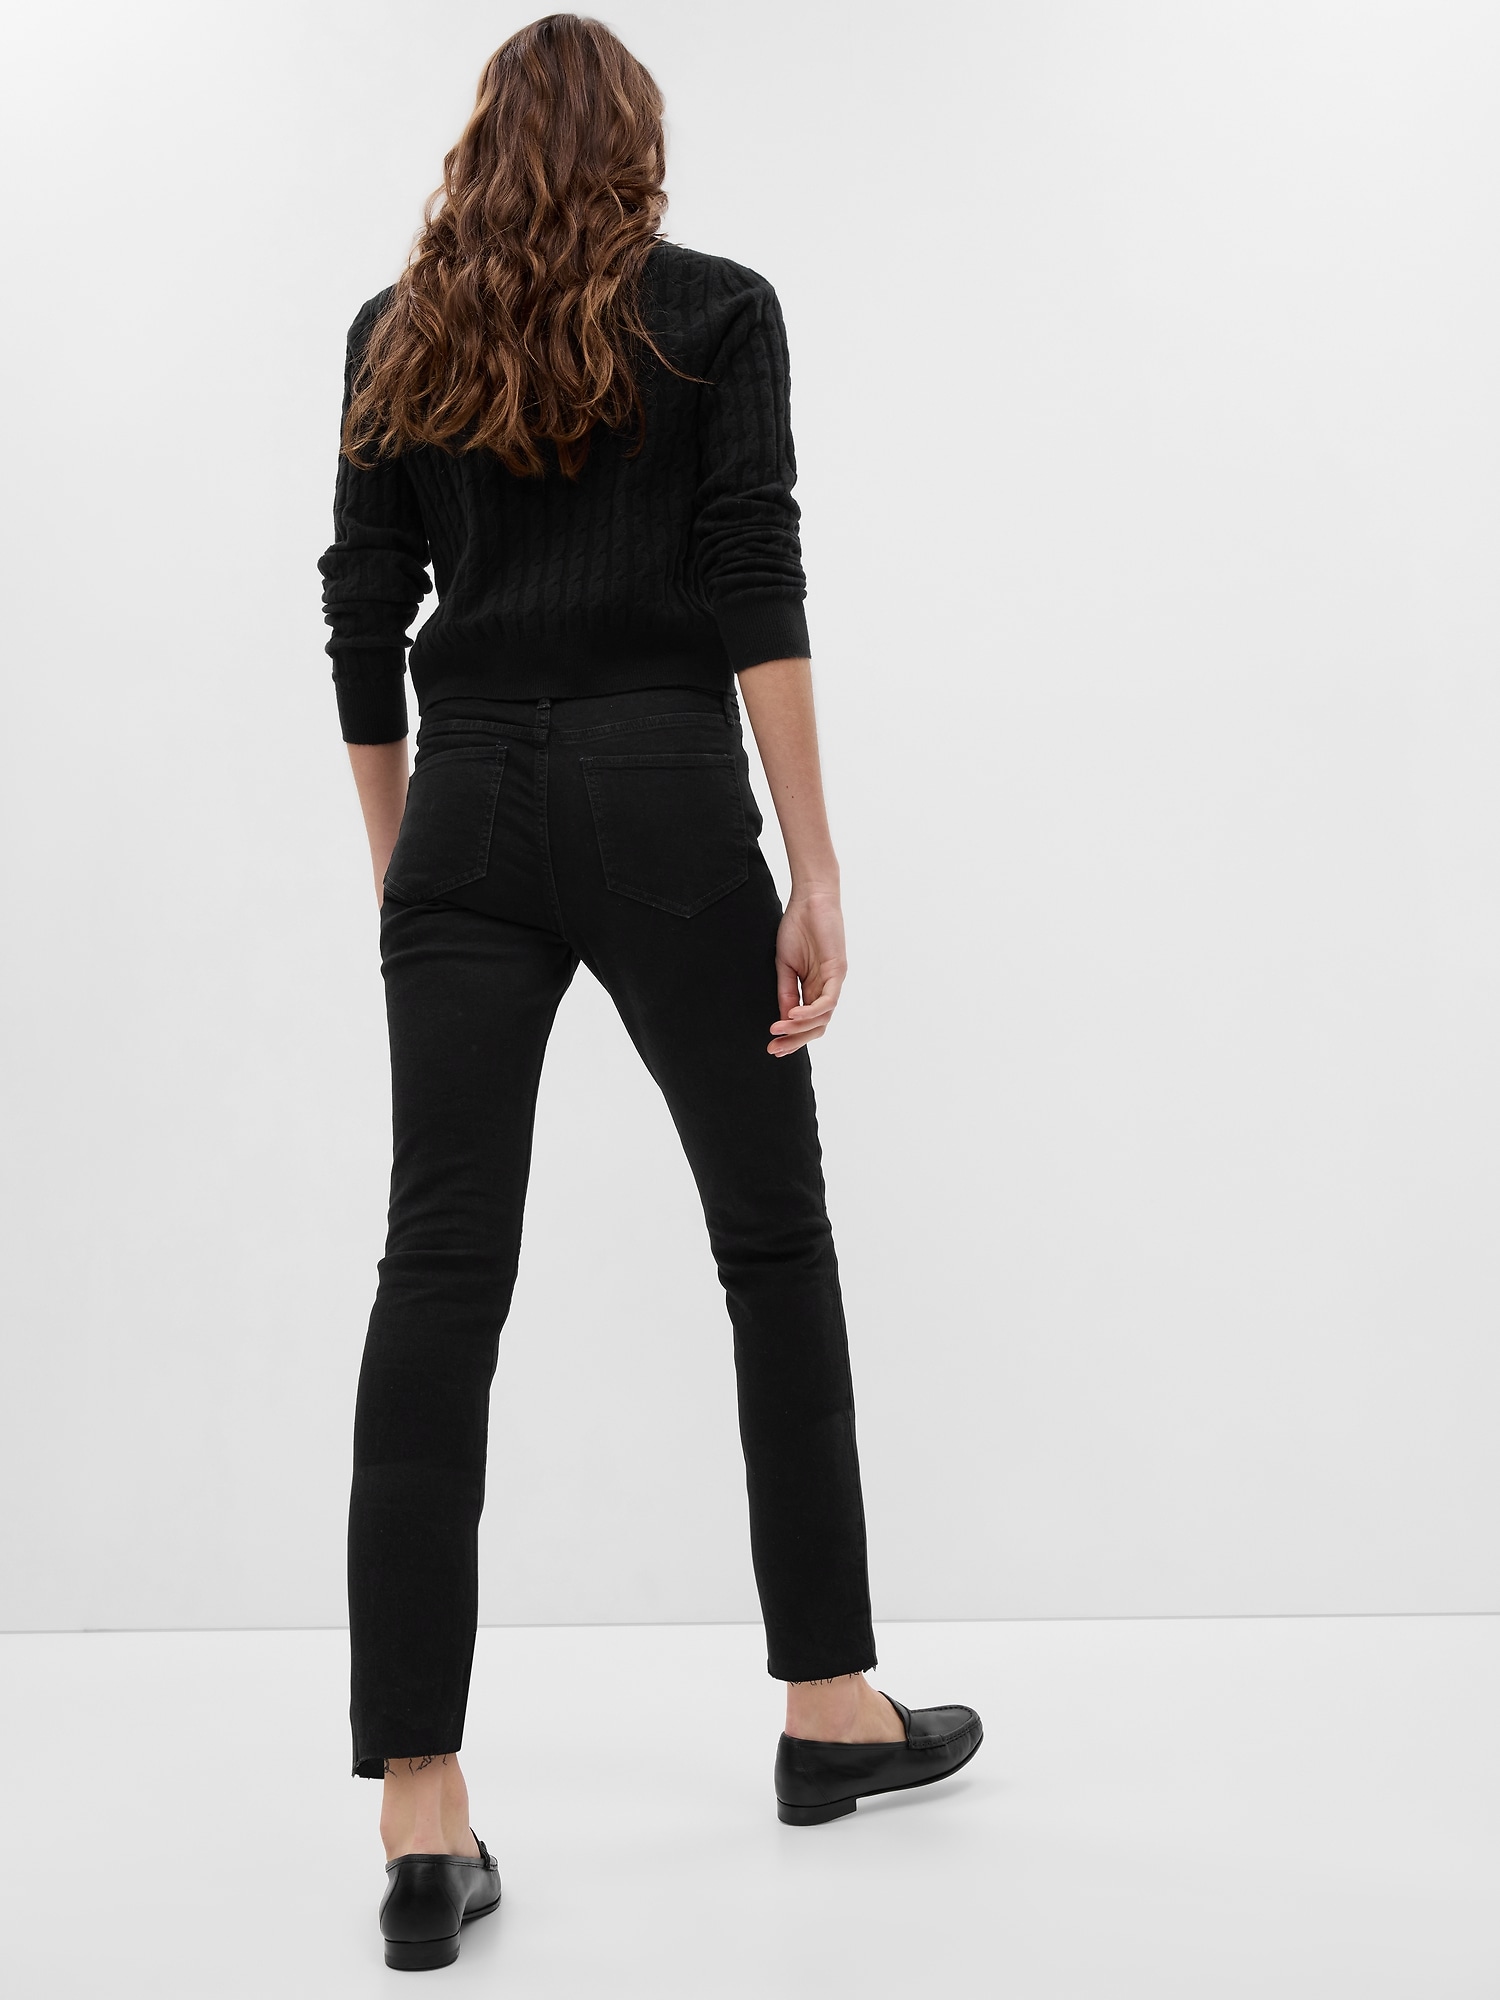 Zara Jeans Vintage Skinny High Rise Ankle Denim Women's Size 8